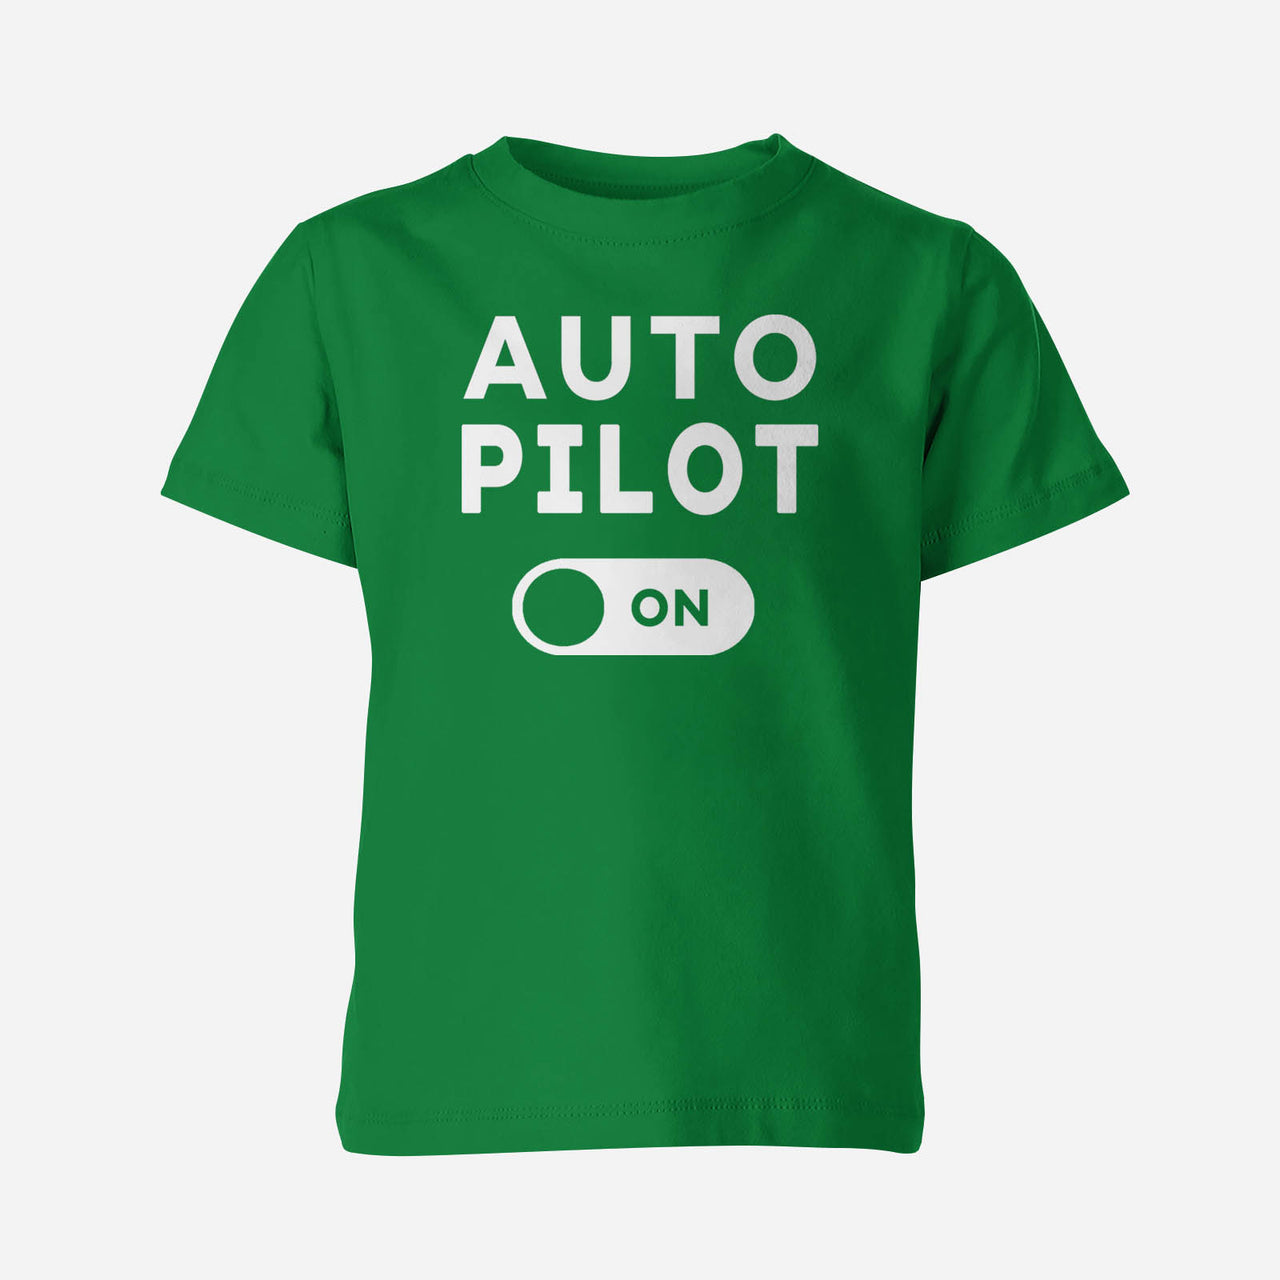 Auto Pilot ON Designed Children T-Shirts